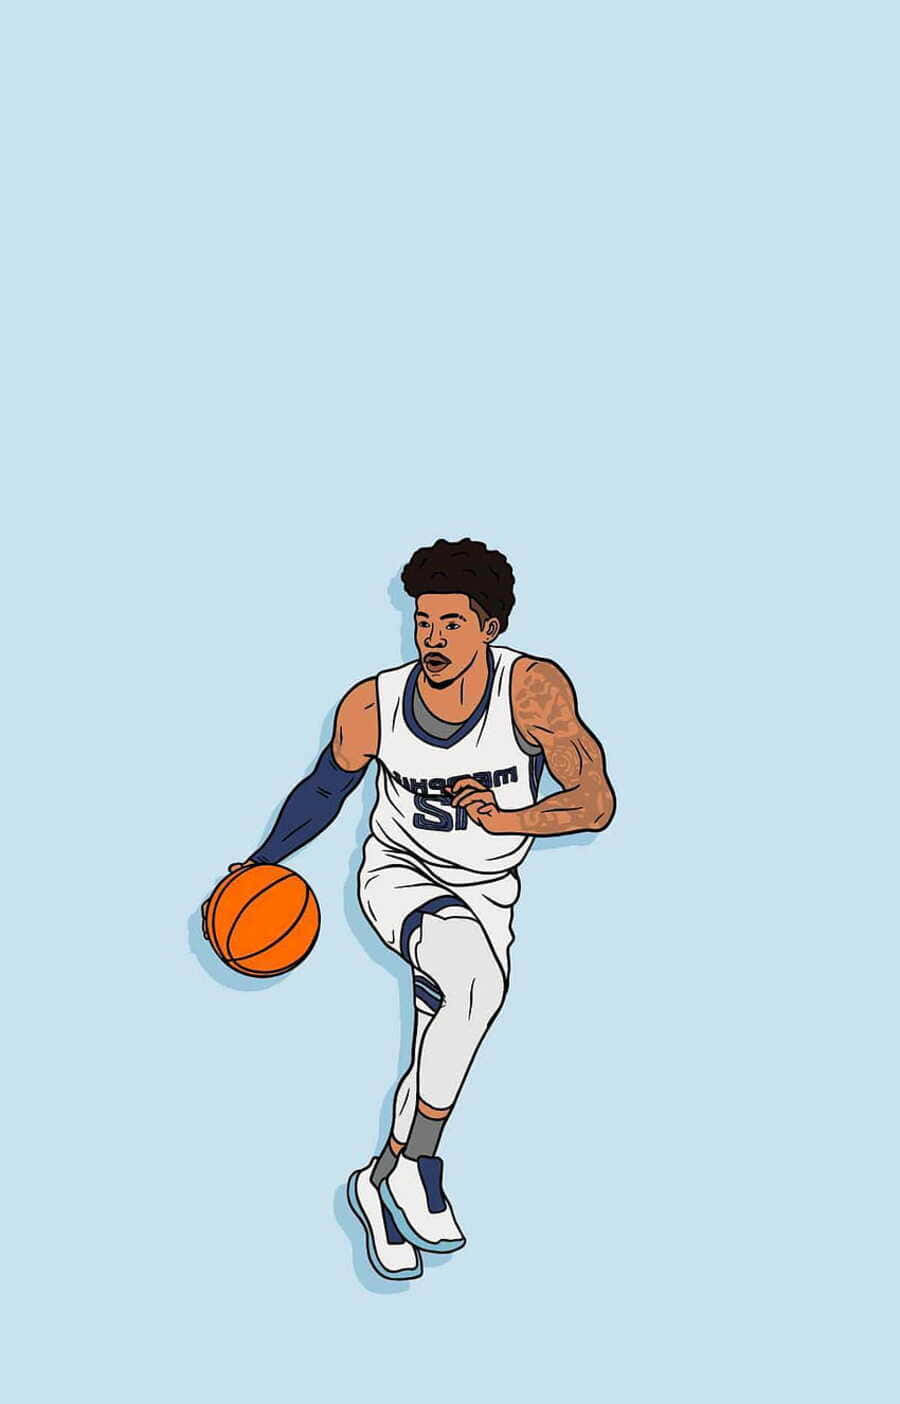 Basketball Player Illustrationi Phone Wallpaper Wallpaper